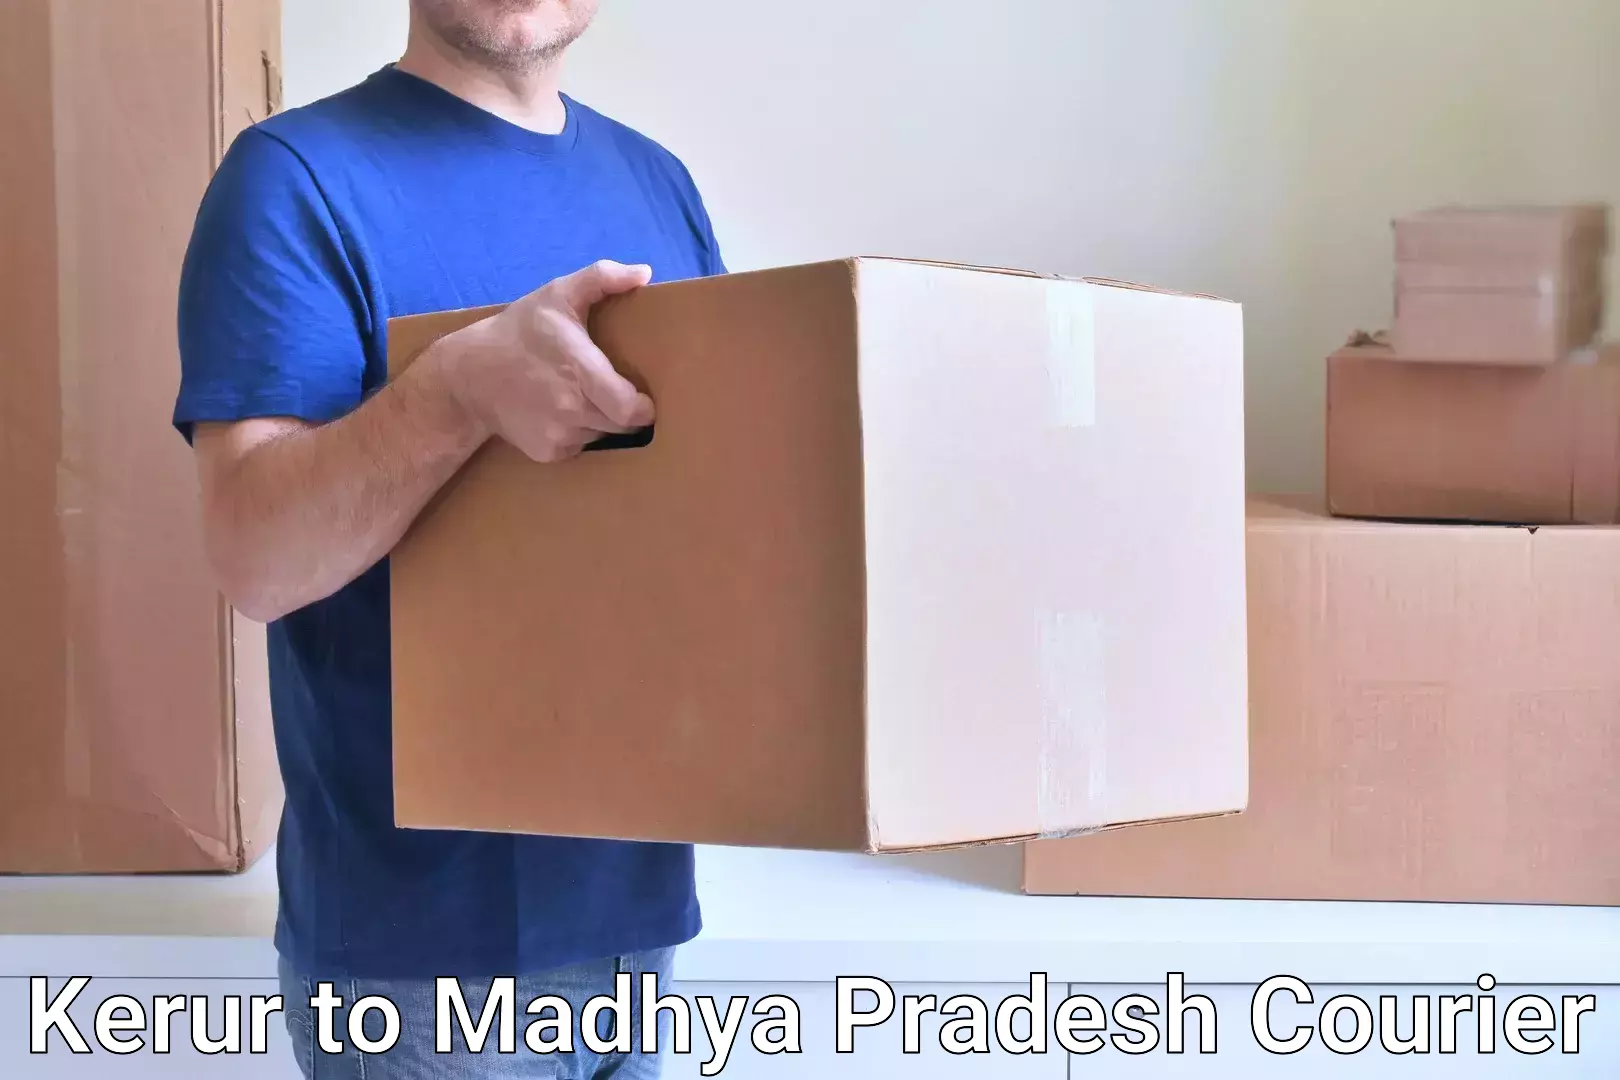 End-to-end delivery Kerur to Vidisha